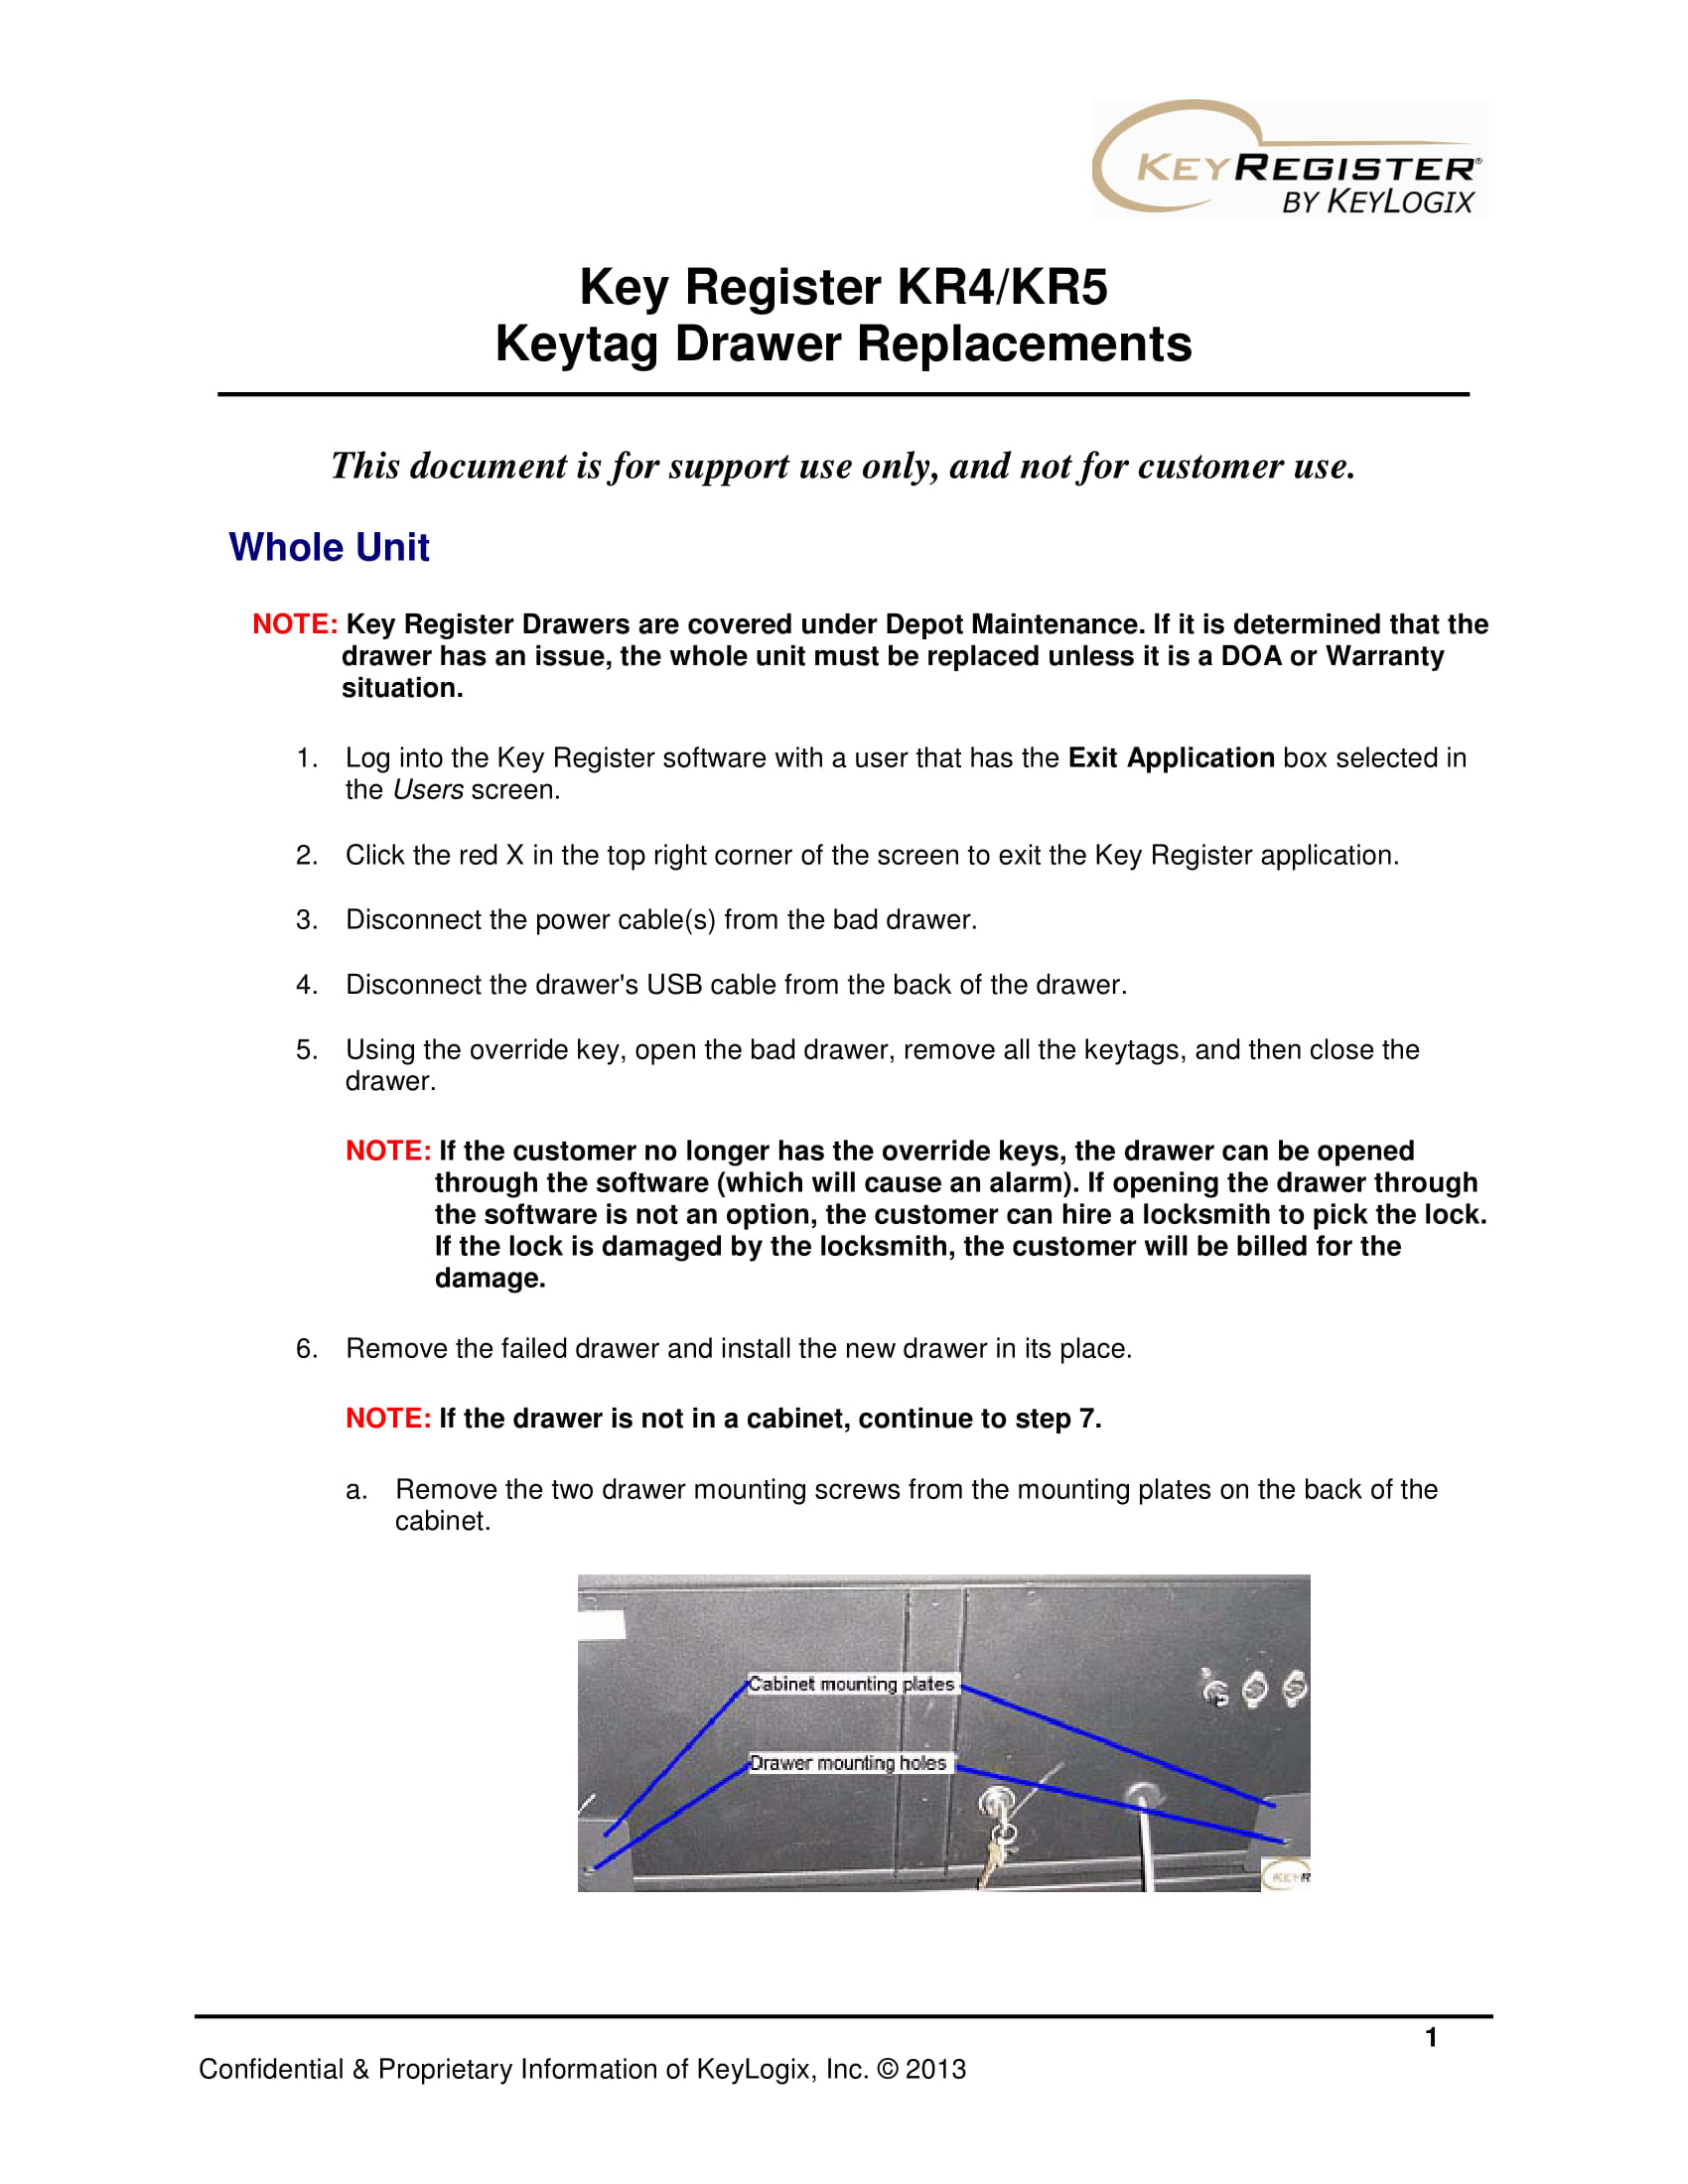 KR4-KR5 Keytag Drawer Replacements-01